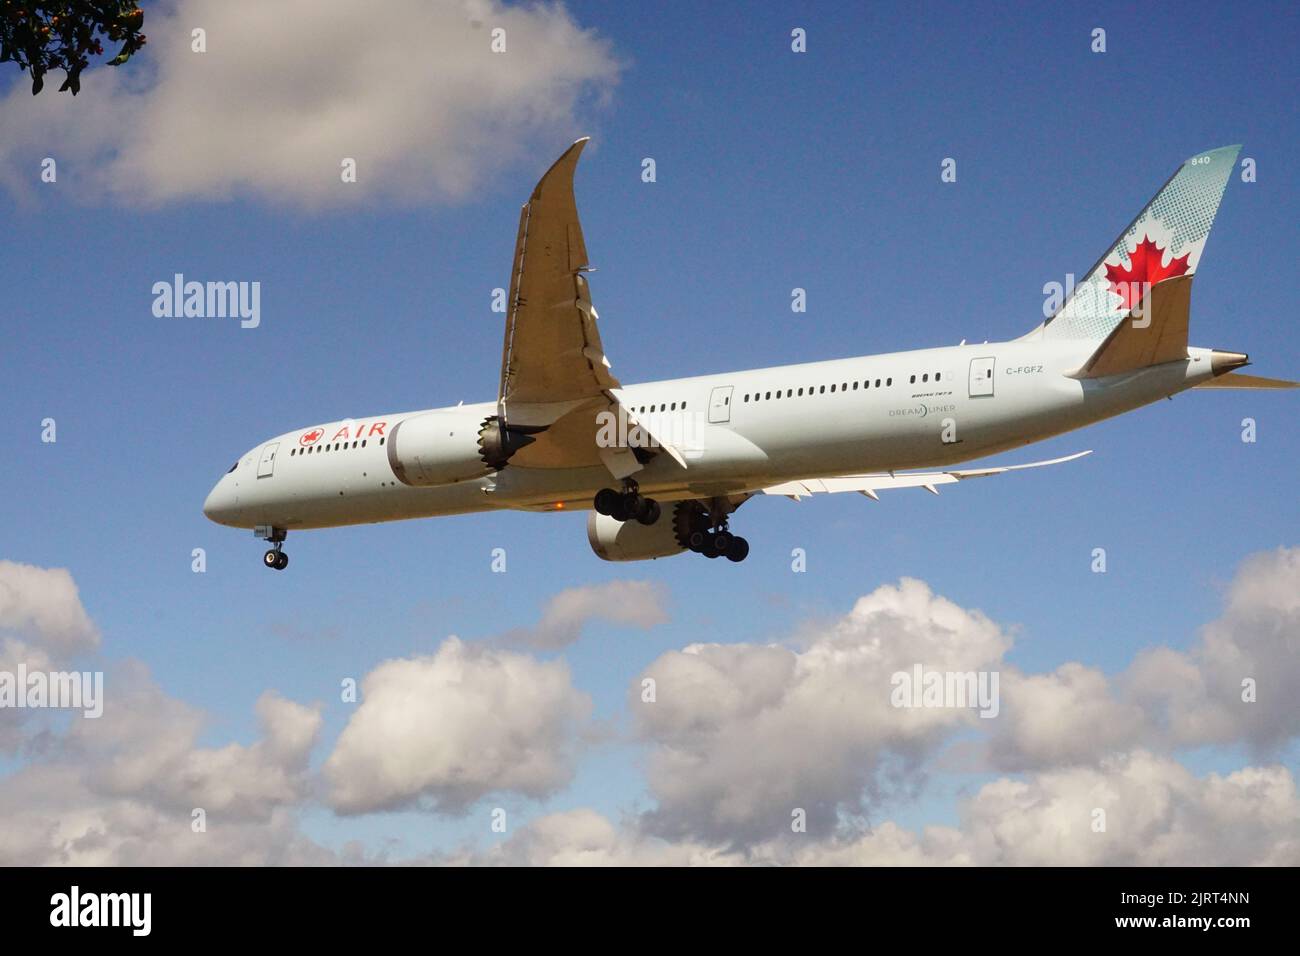 Plane spotting near Heathrow Airport in London, United Kingdom Stock Photo